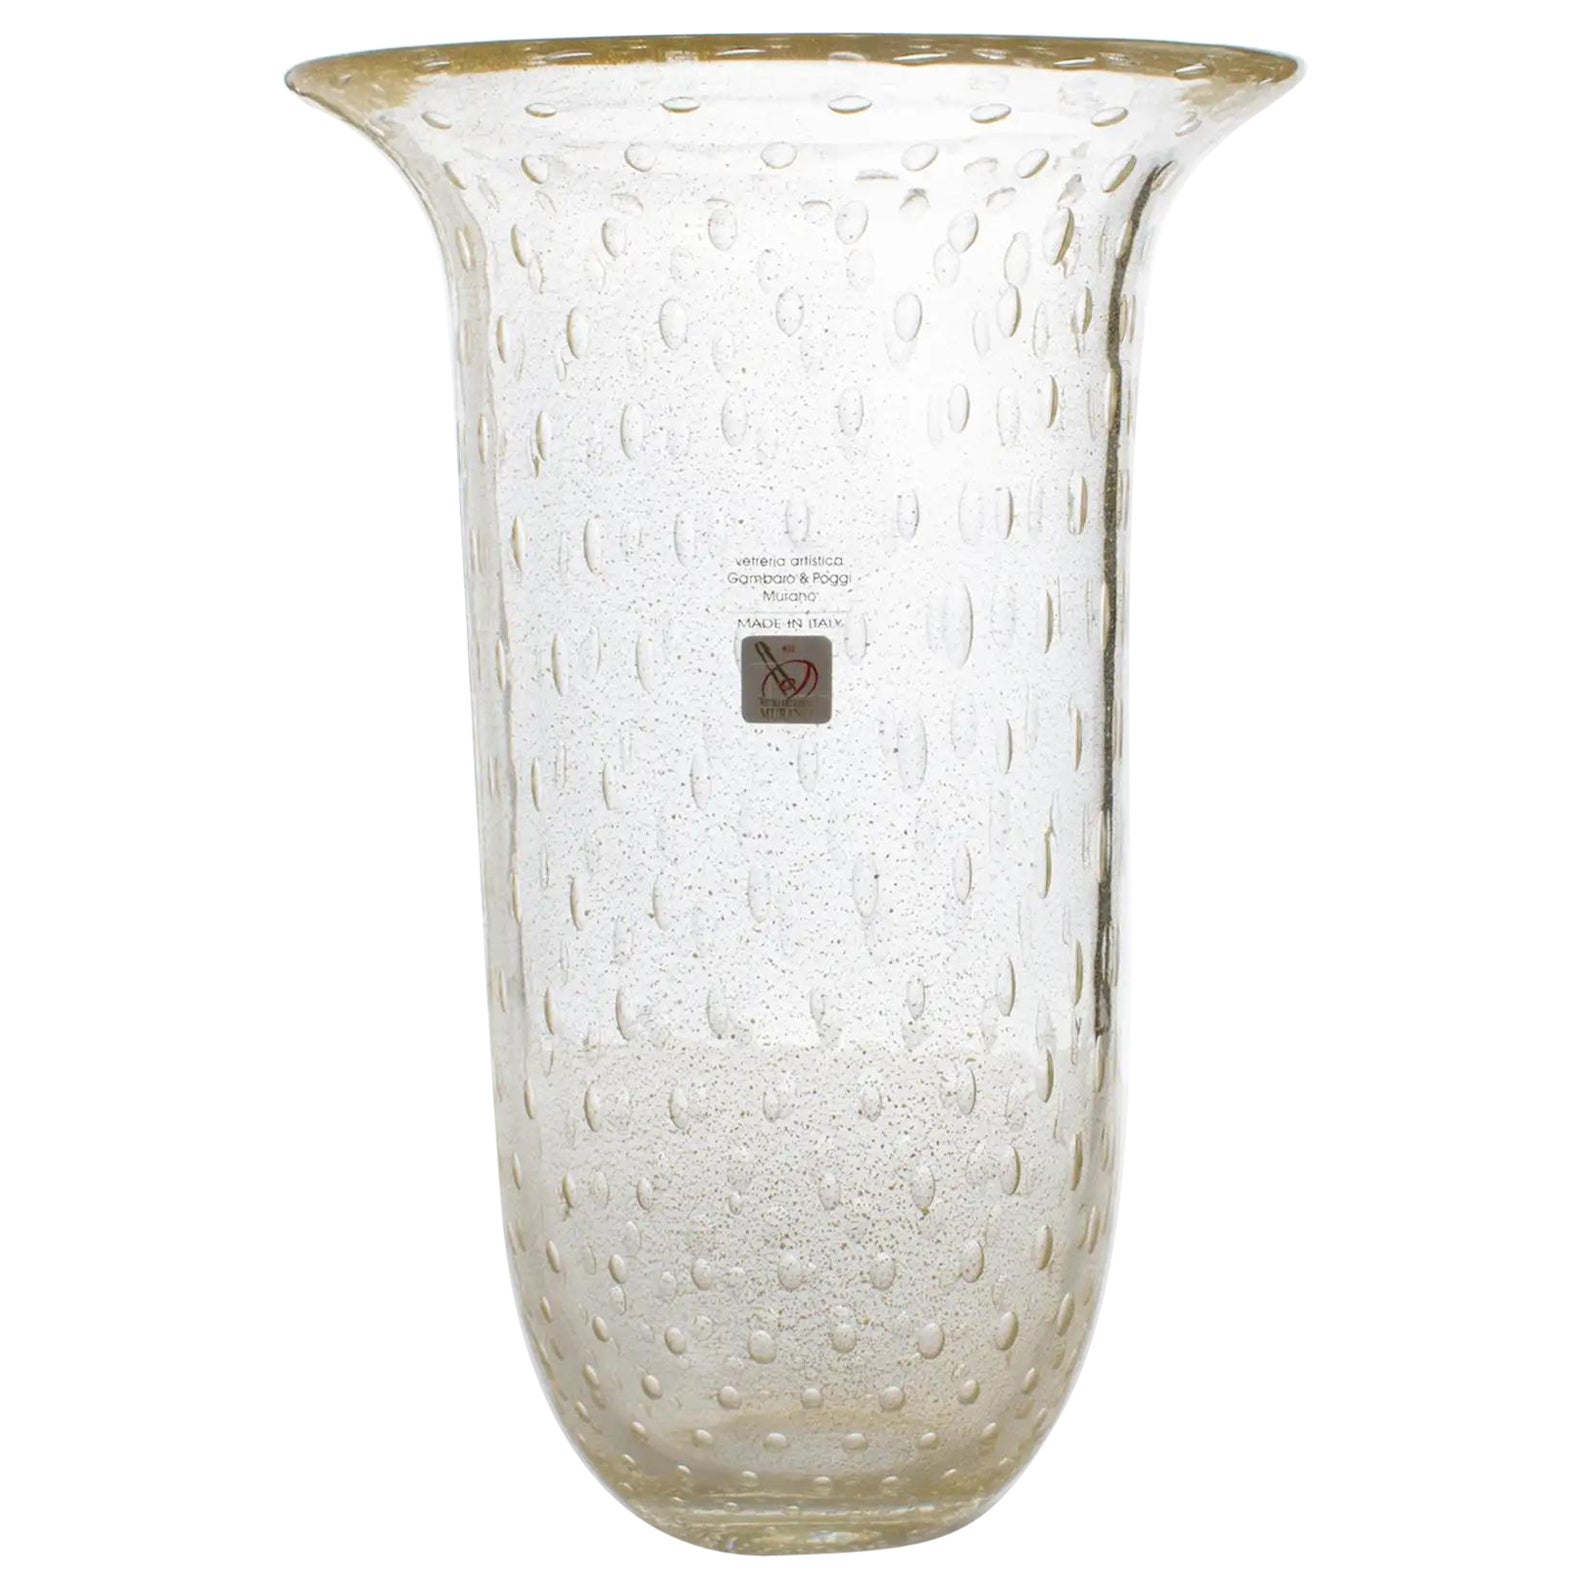 Italian Art Glass Murano Vase Gold Flakes and Bubbles by Gambaro & Poggi